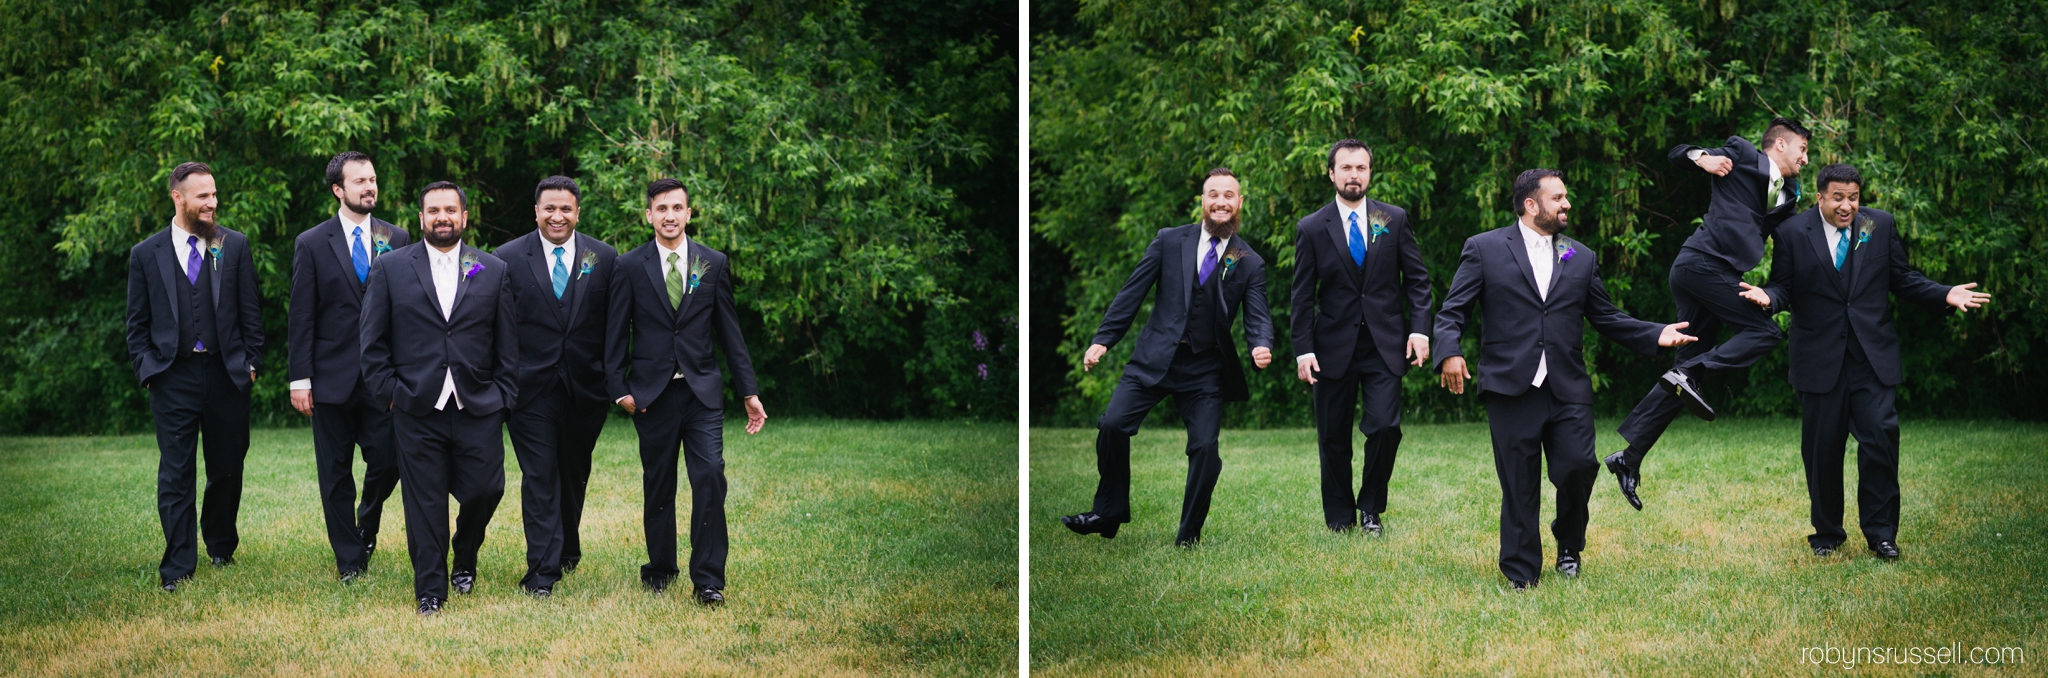 26-groom-and-groomsmen-being-silly-cambridge-wedding-photographer.jpg